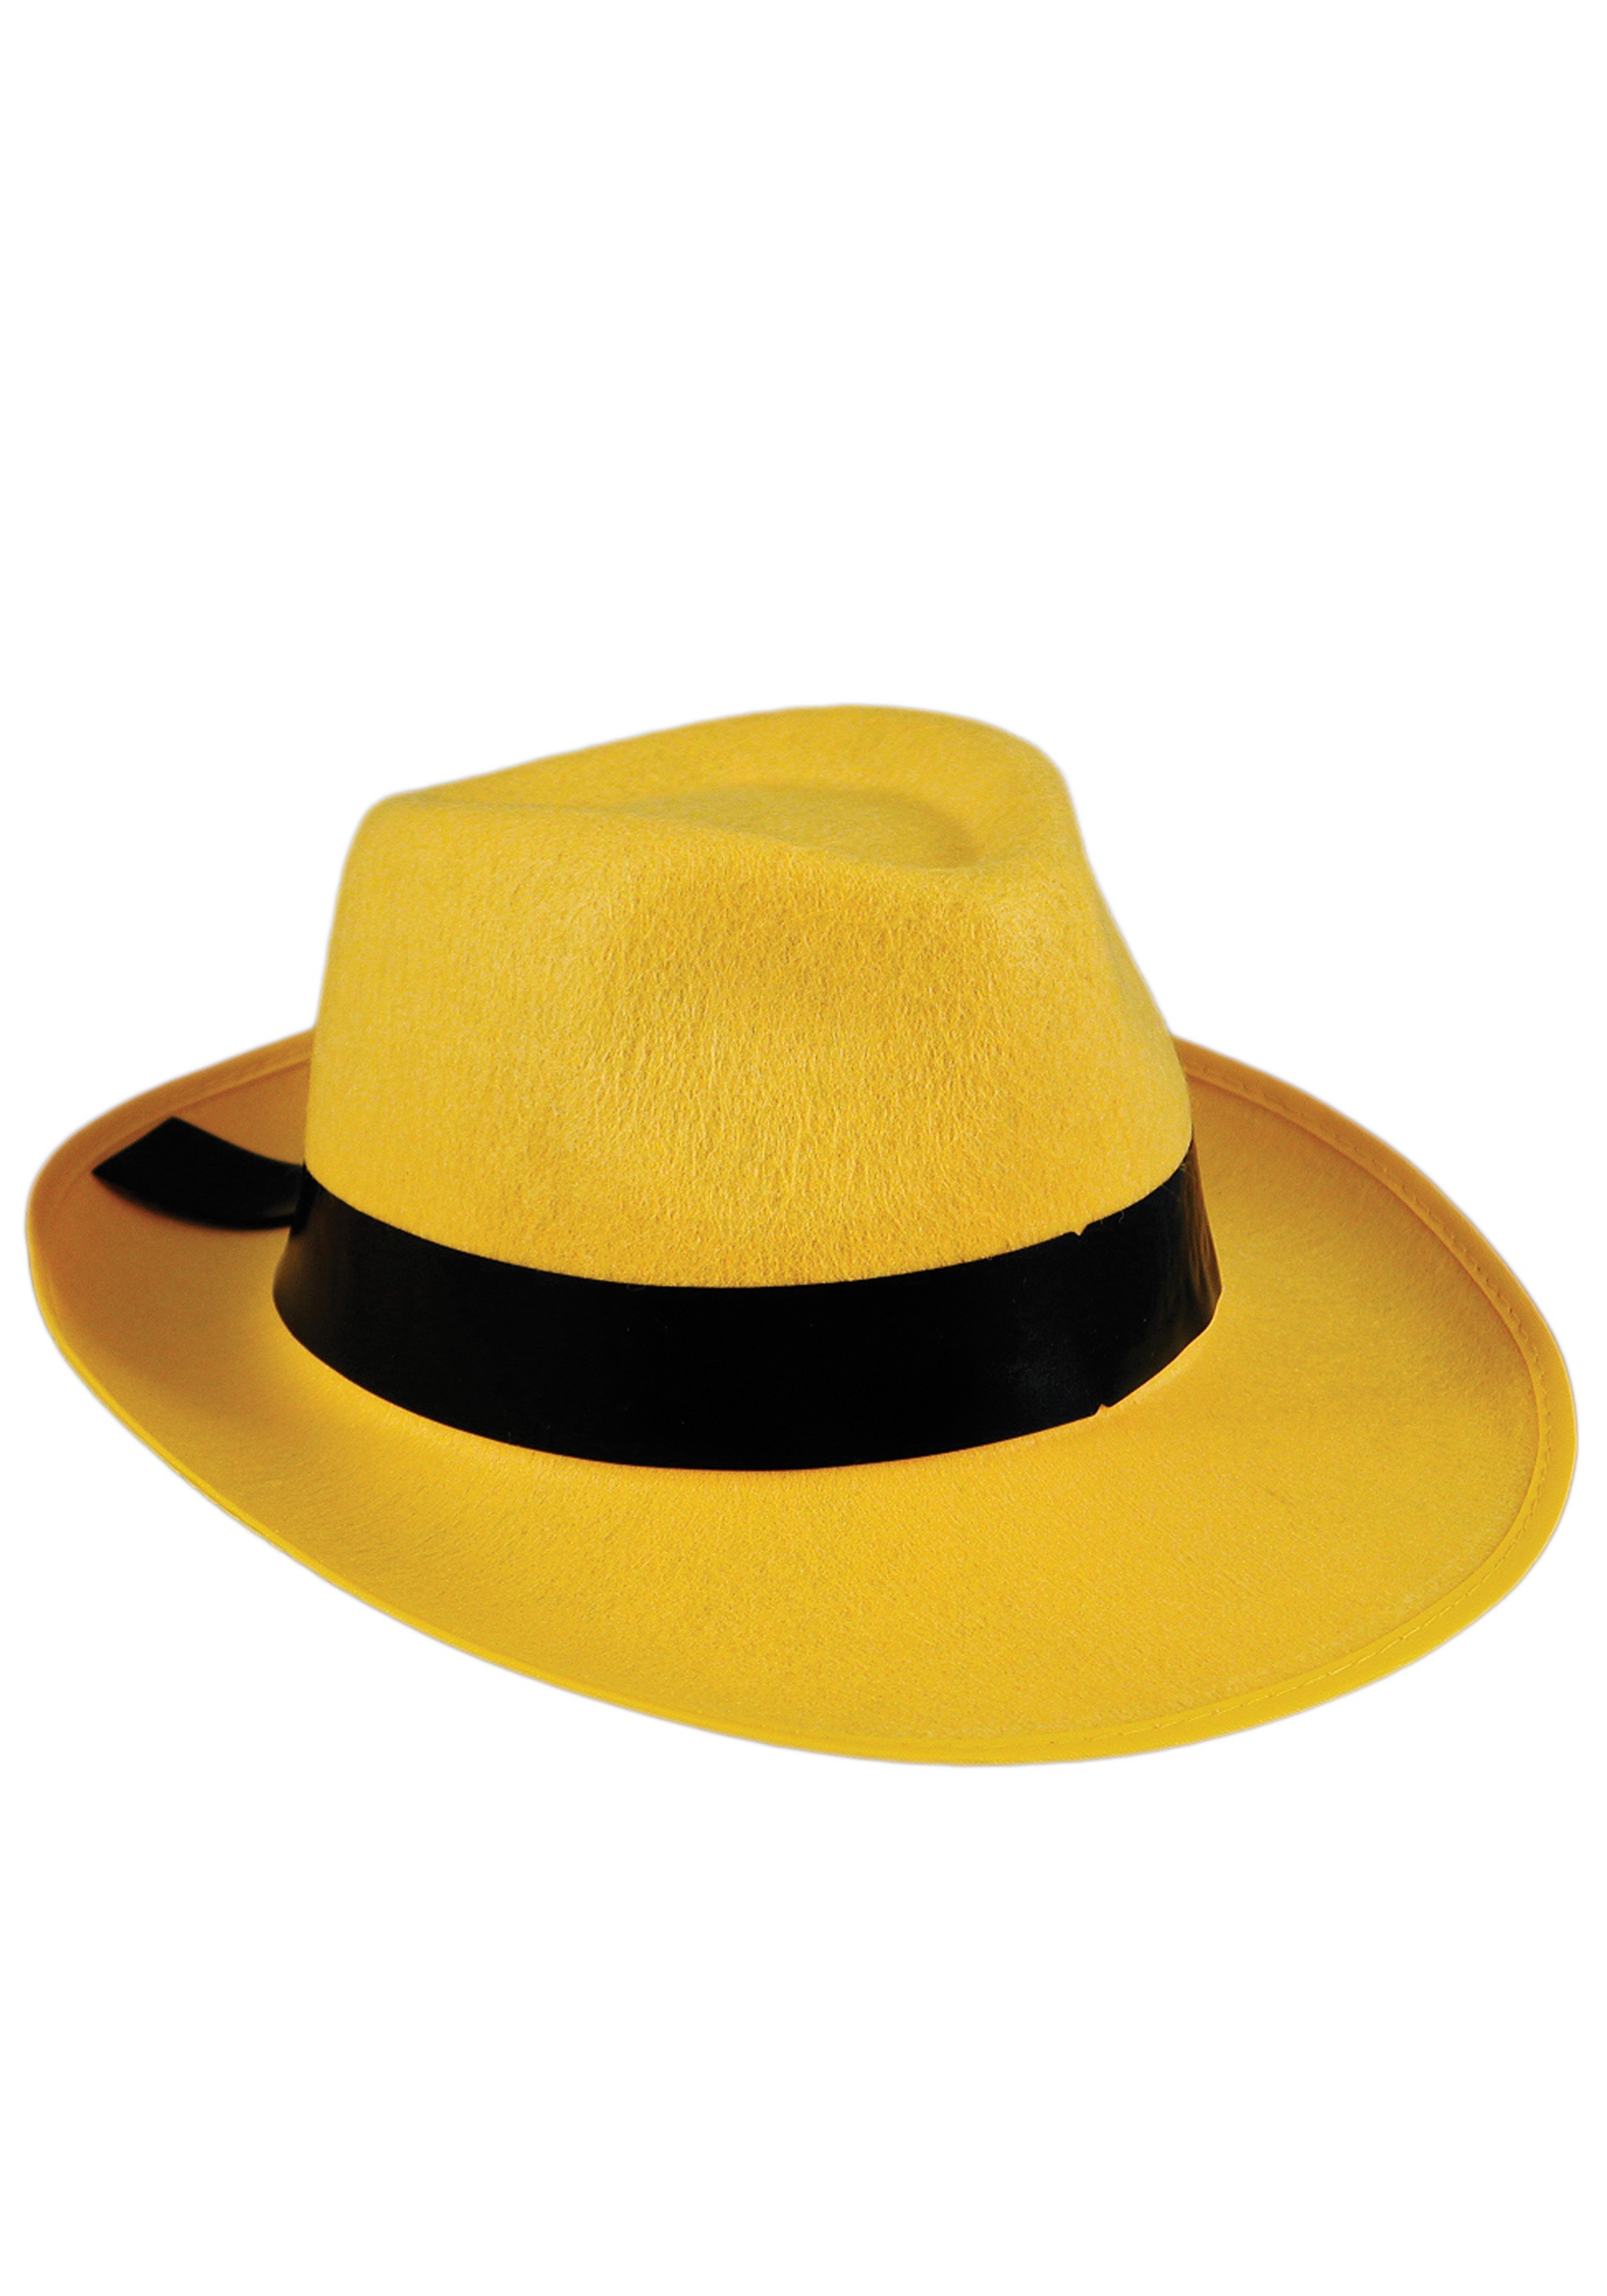 http://images.halloweencostumes.com/products/6004/1-1/yellow-fedora-hat.jpg